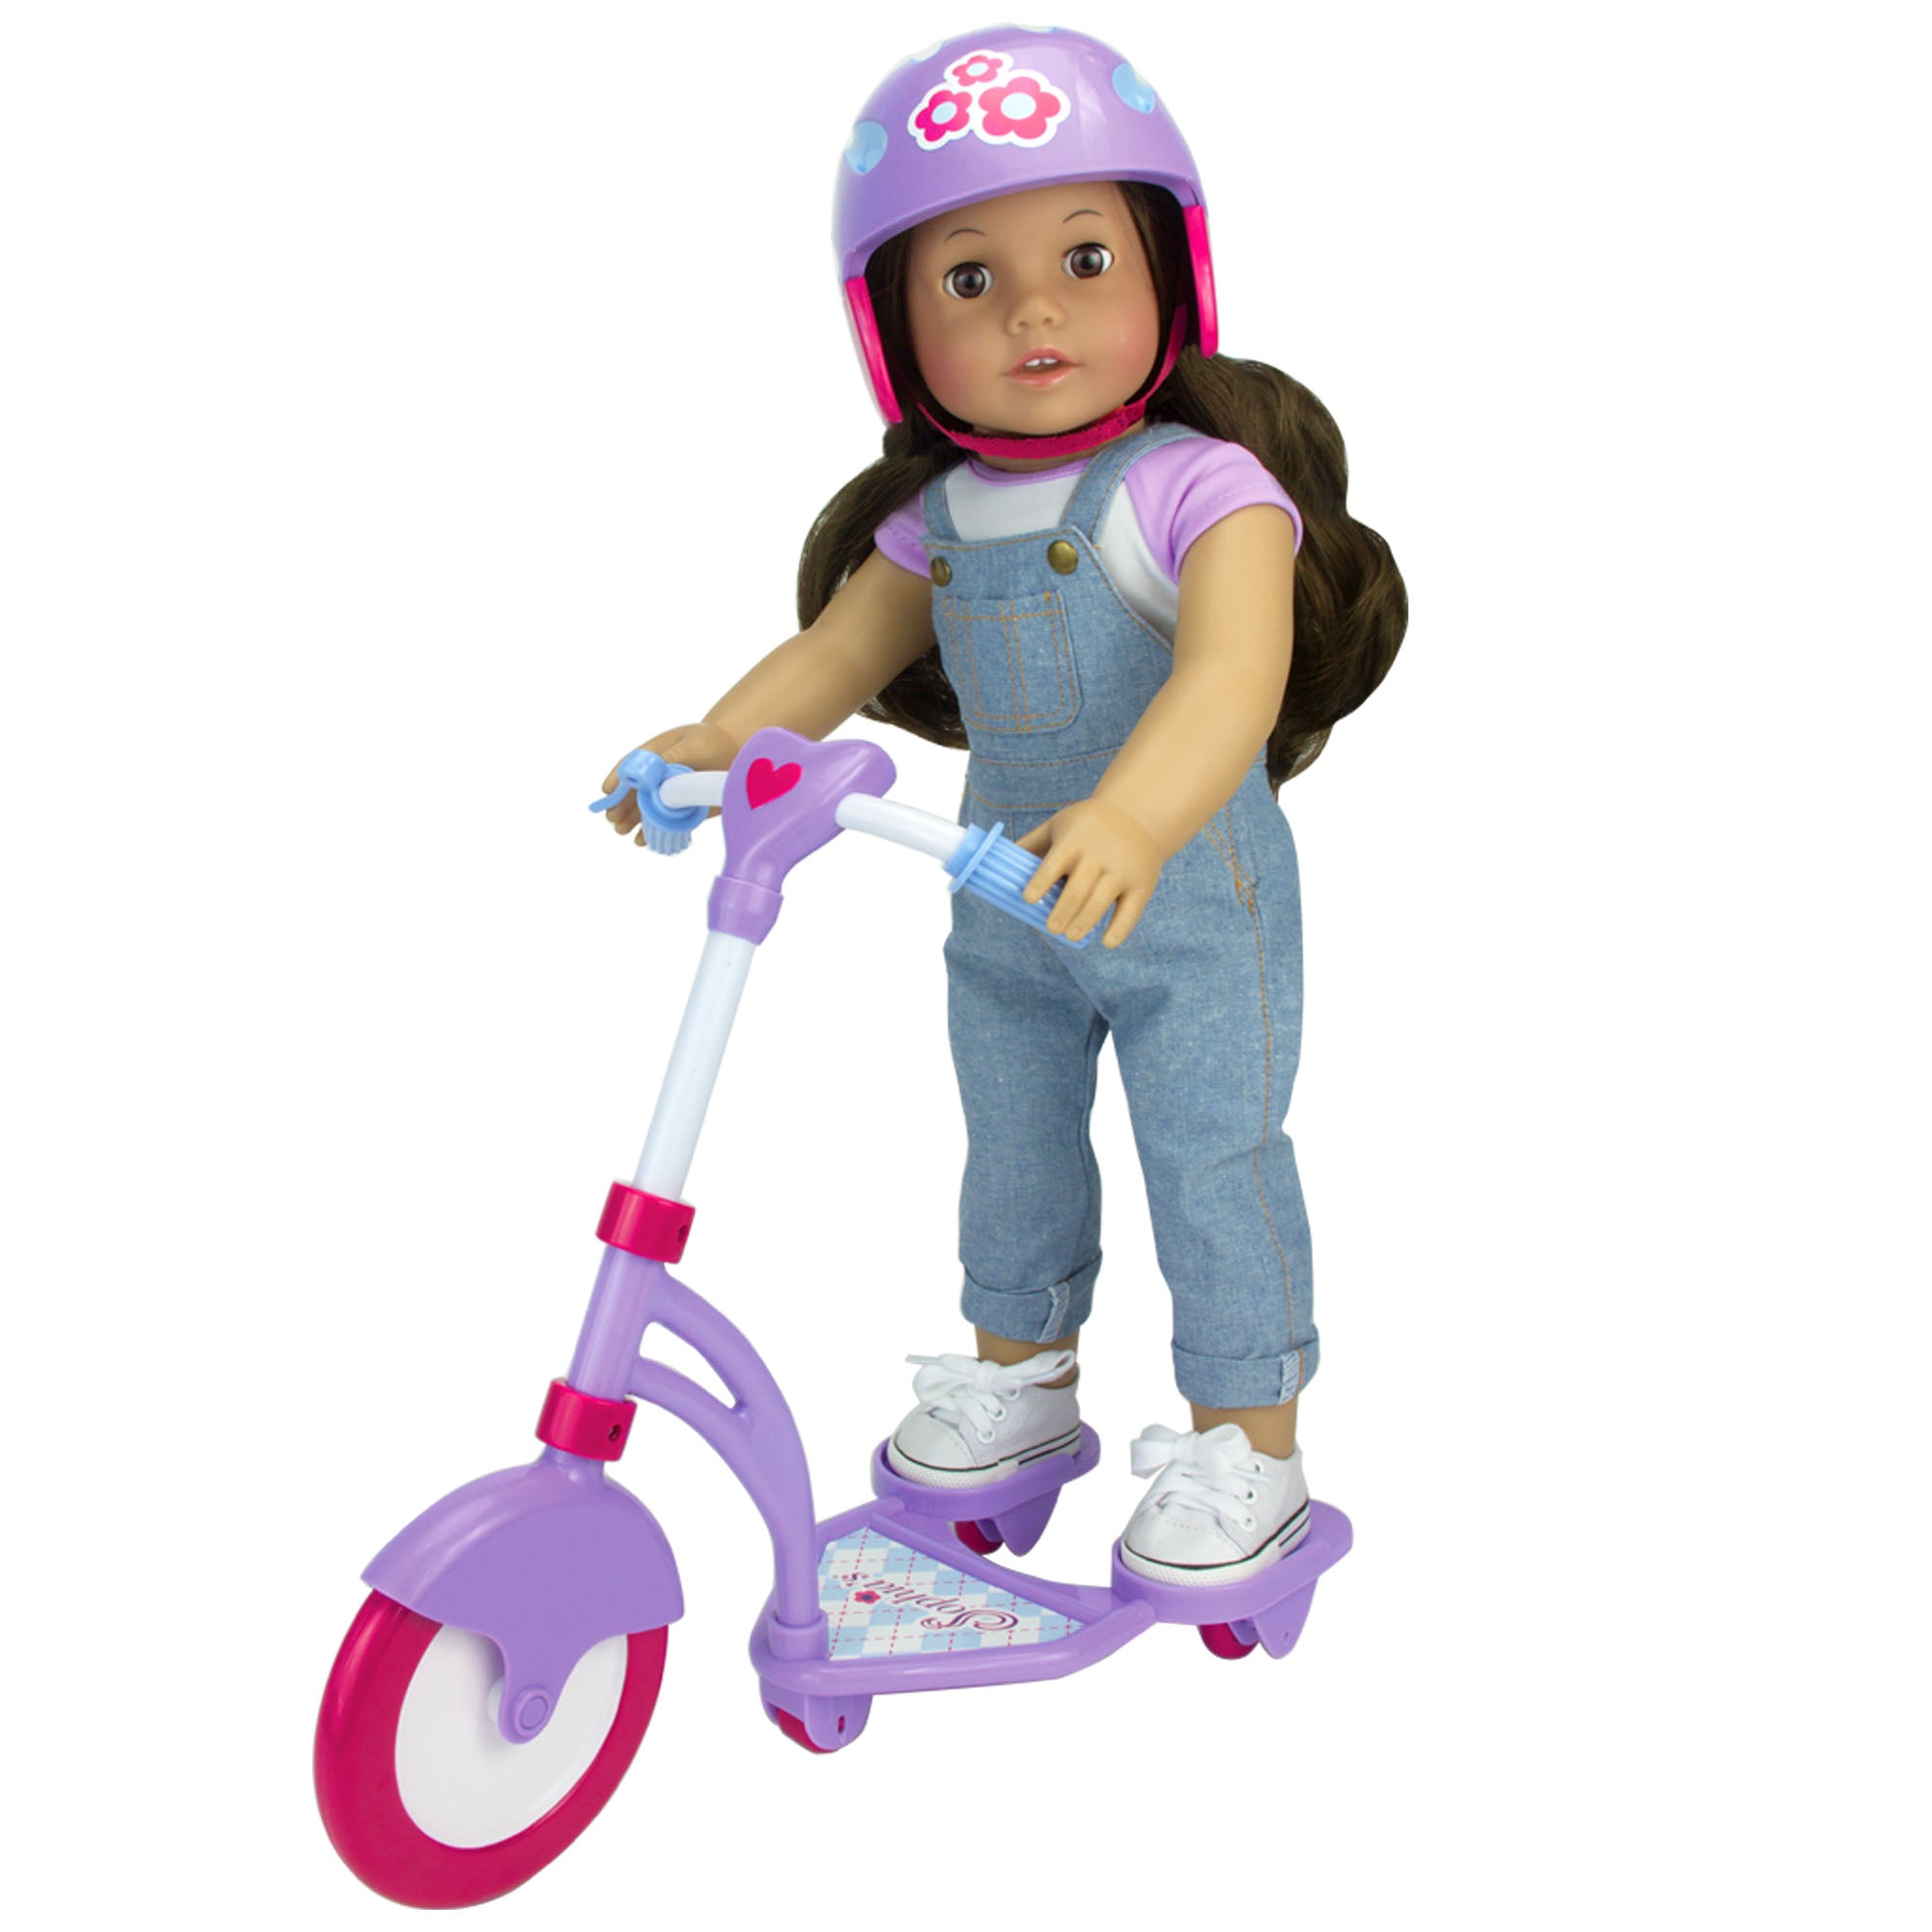 Sophia's Mini Scooter and Helmet Set for 18" Dolls, Multicolor